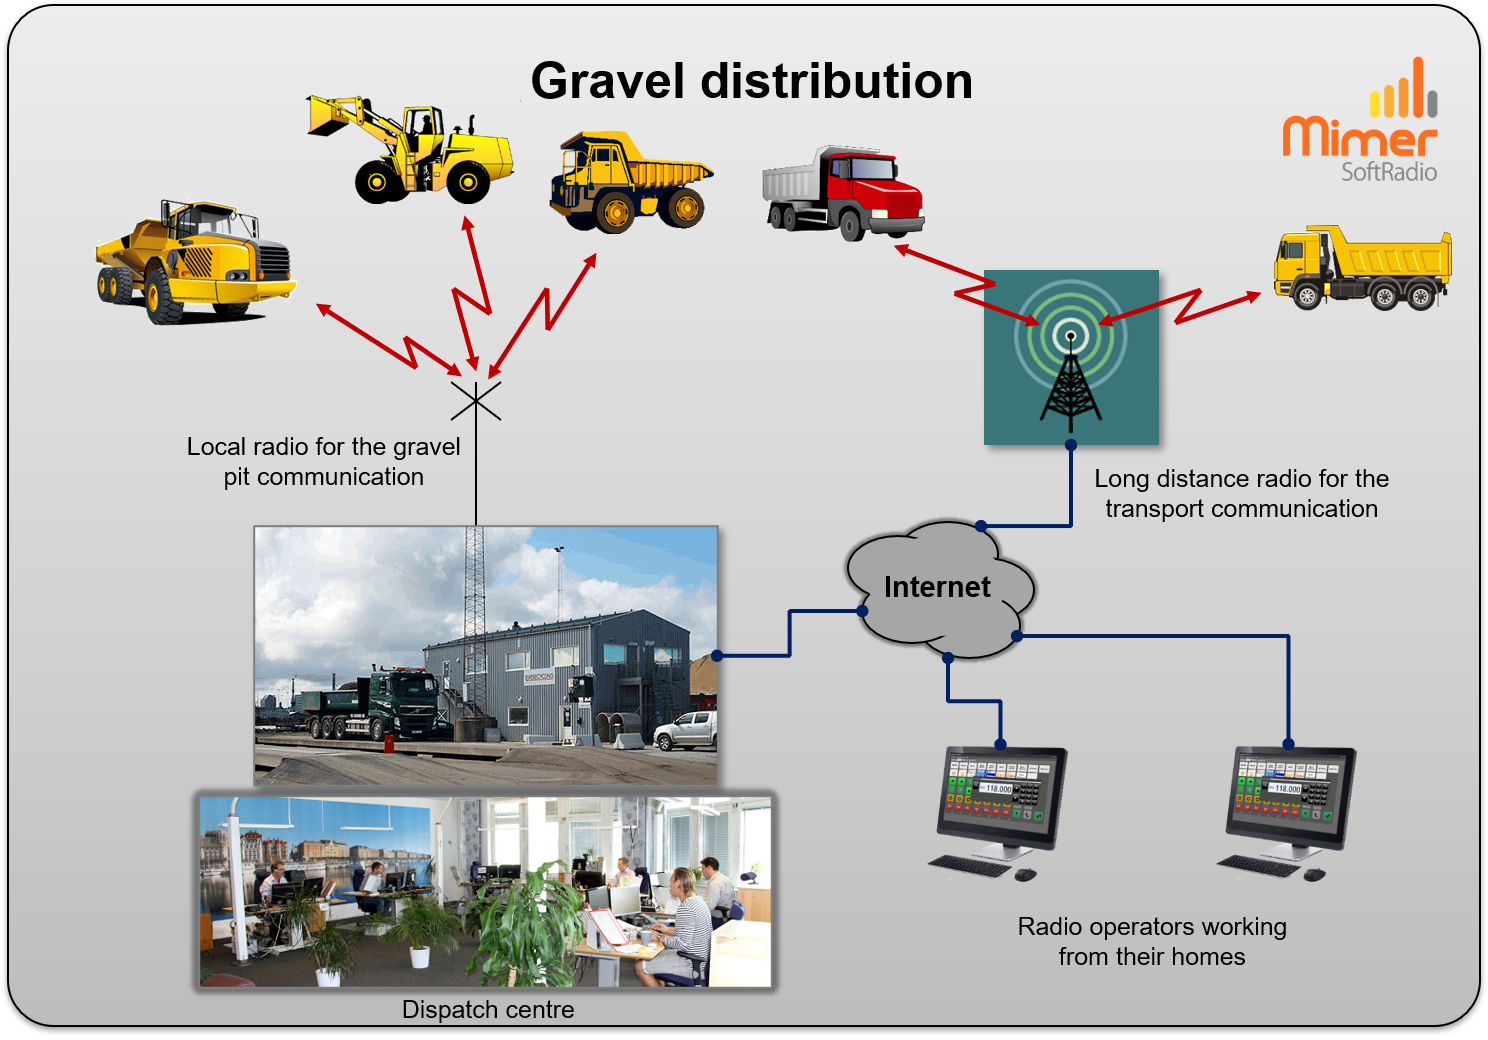 Gravel distribution